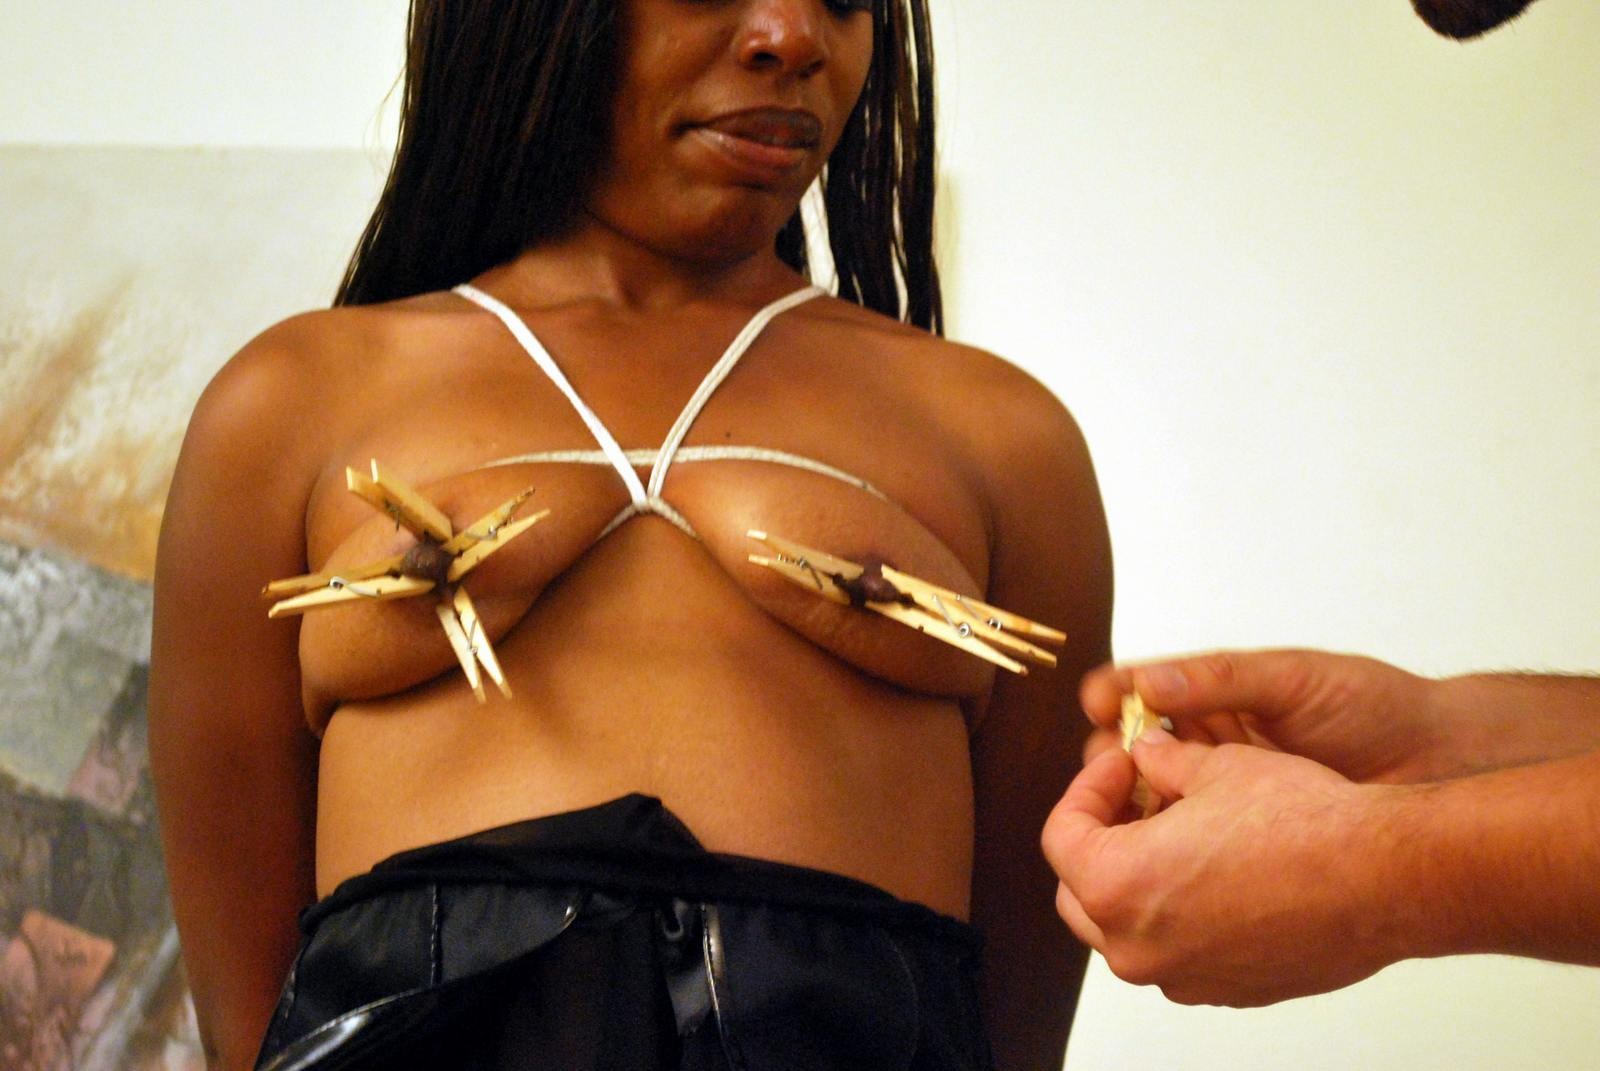 Black bdsm debutant slavegirl Shantes breast bondage and pegged nipple torments #72157644